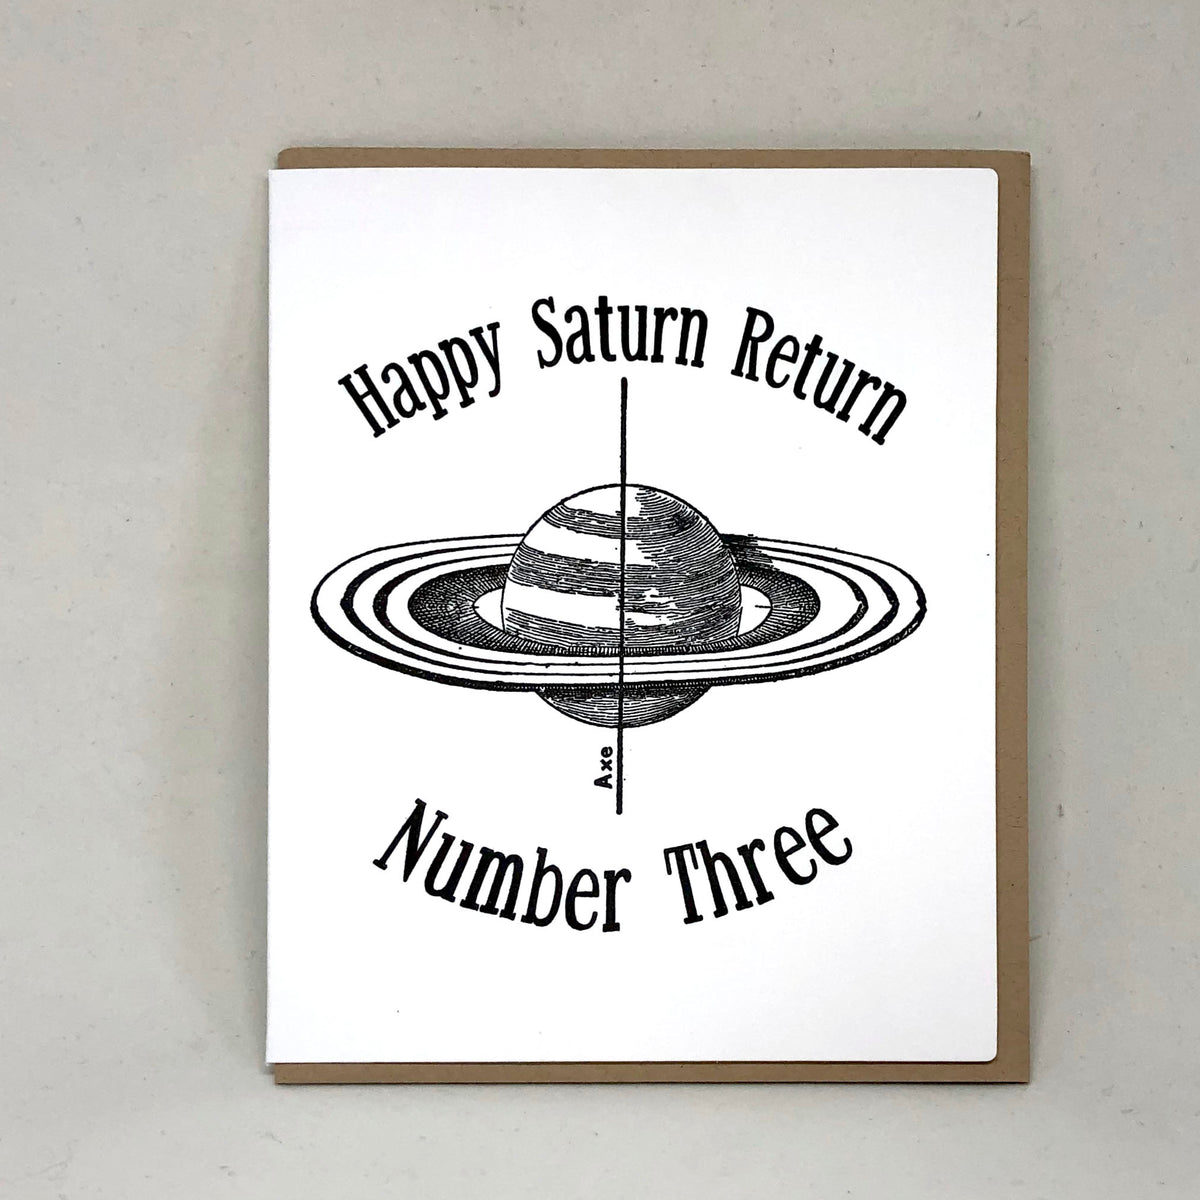 Happy Saturn Return - Number Three